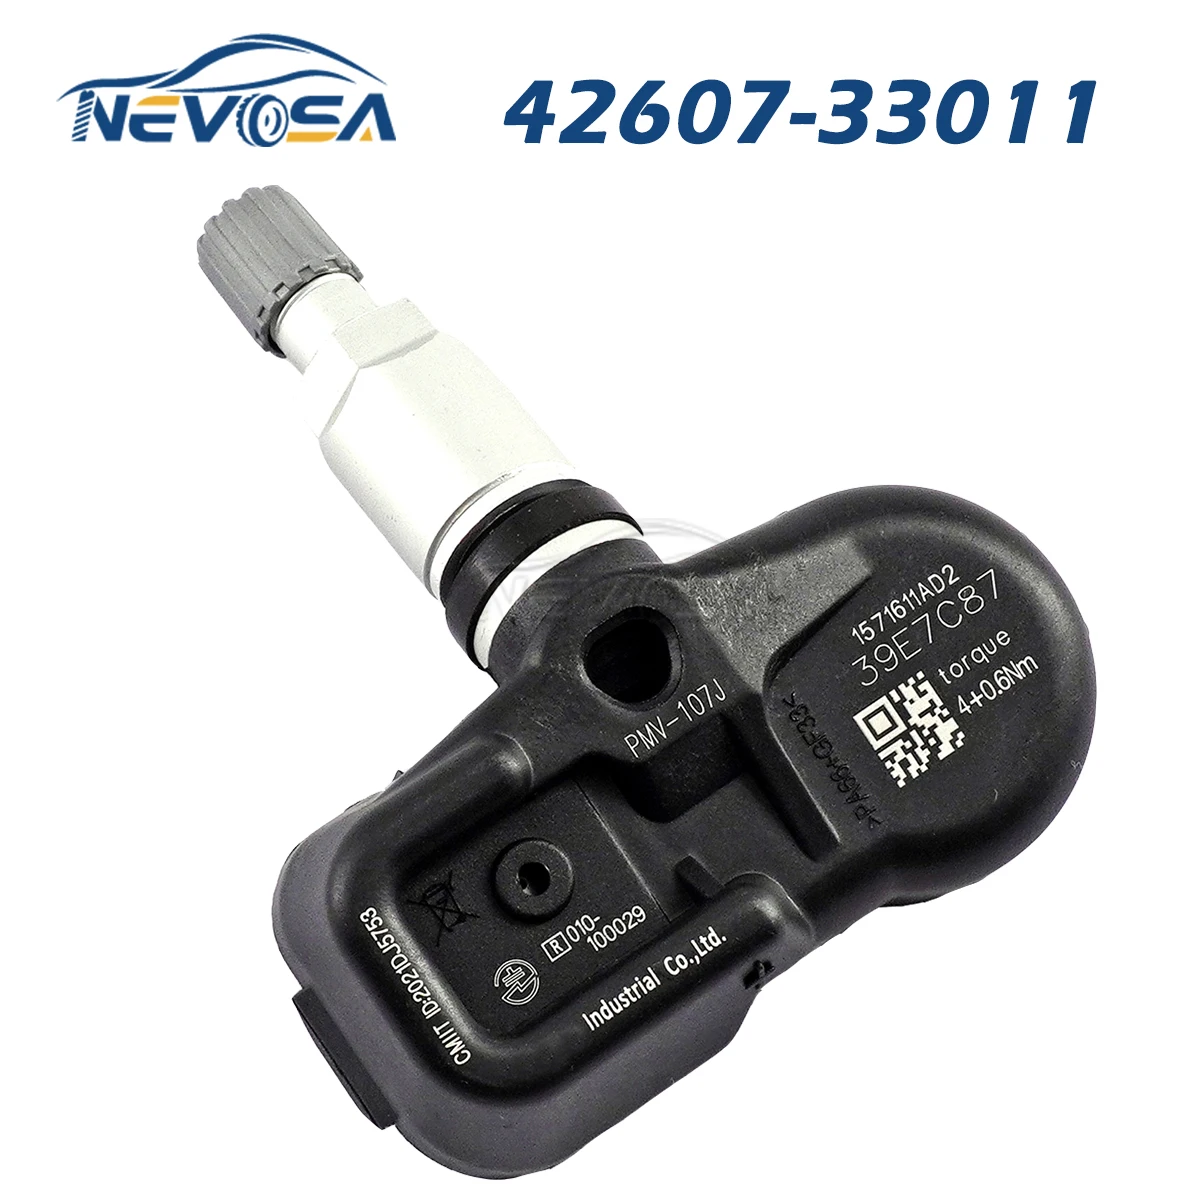 

Nevosa 42607-33011 TPMS Tire Pressure Sensor For Toyota Avalon Carmy Lexus GX470 LS600h RX350 LX570 Scion 42607-33021 315MHz